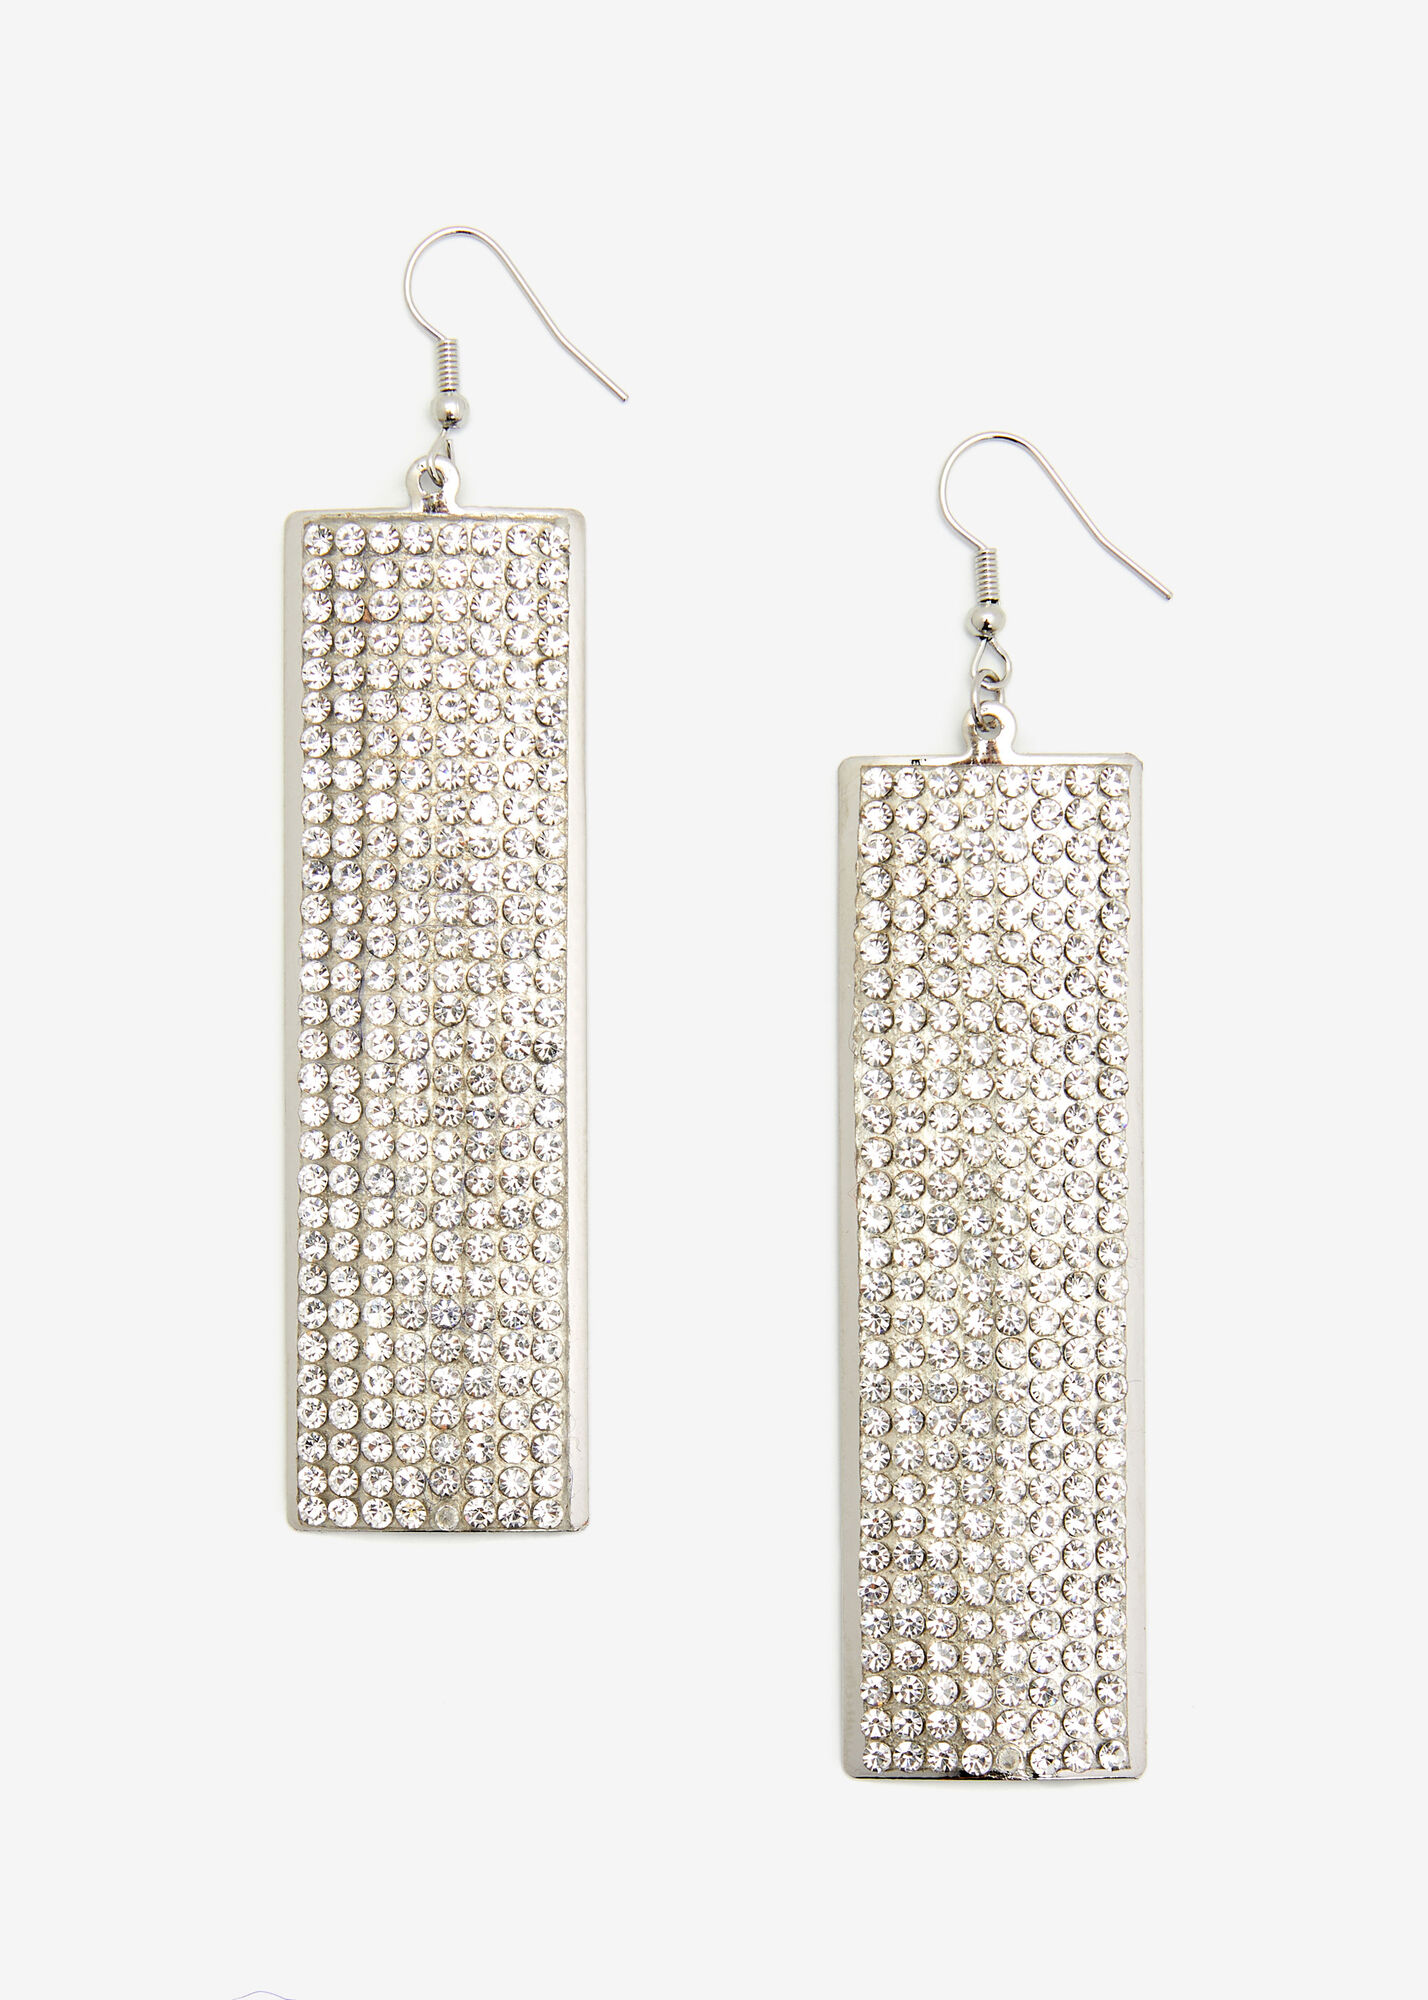 Pendant earrings - Metal, resin & strass, silver, black & crystal — Fashion